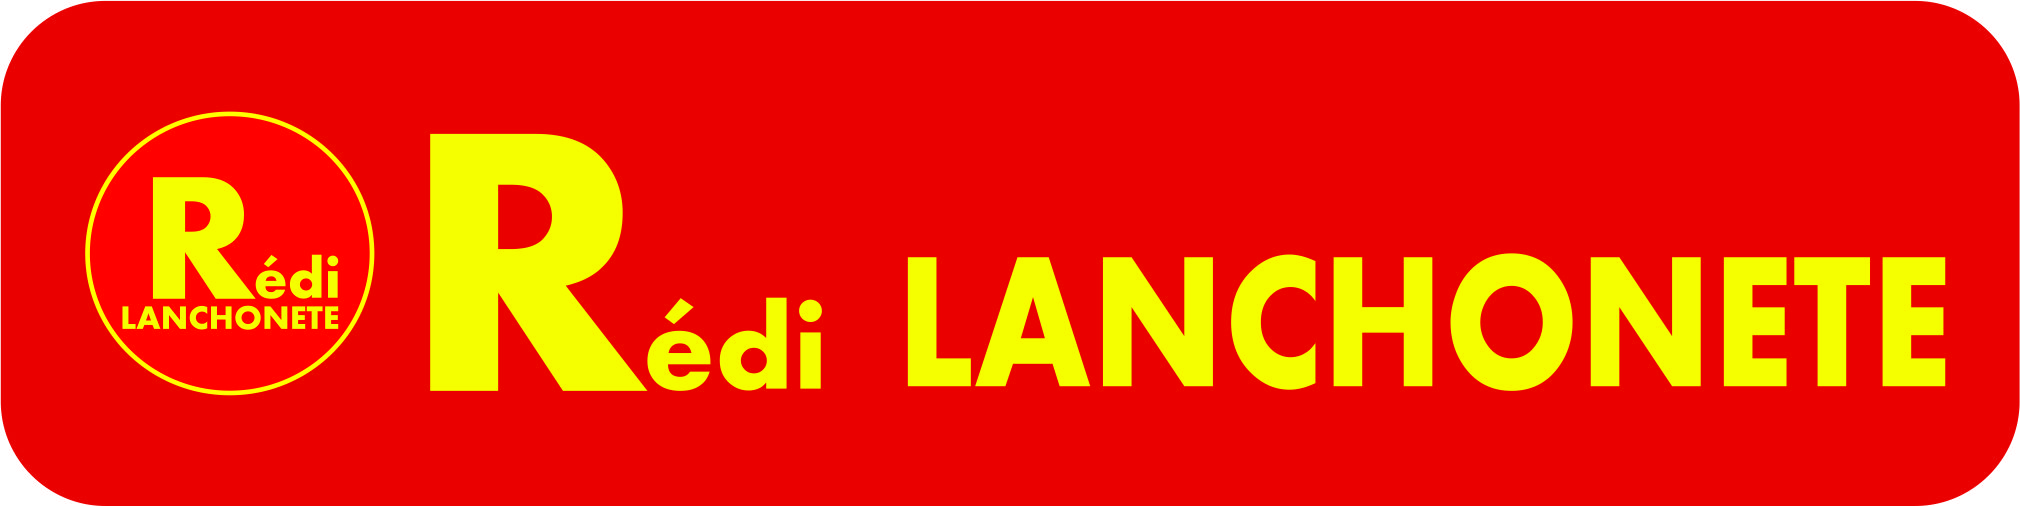 Red Lanchonete